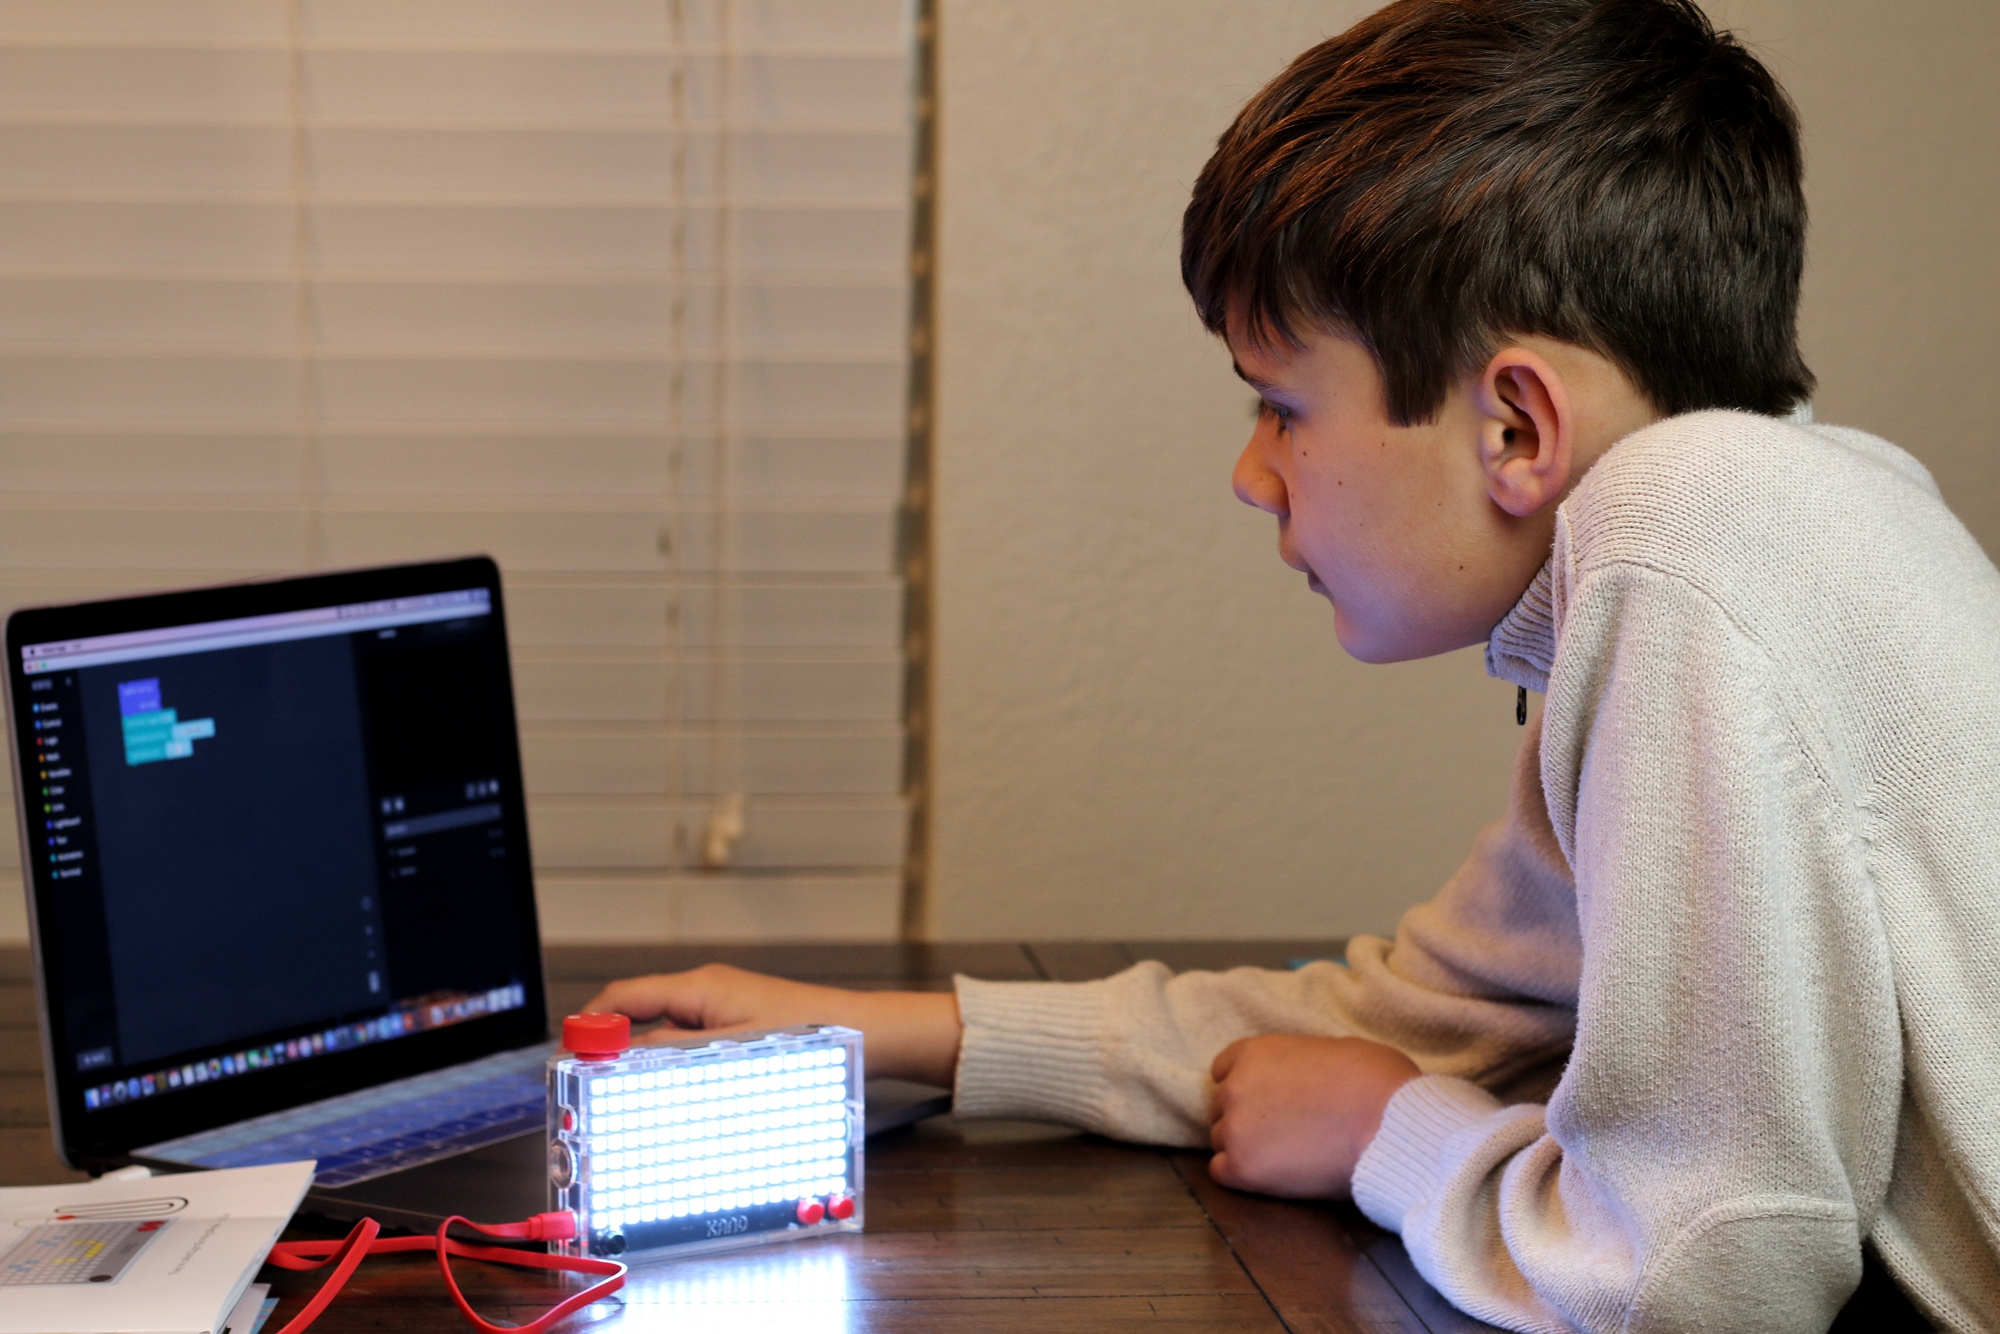 Noah coding with Kano Pixel Kit